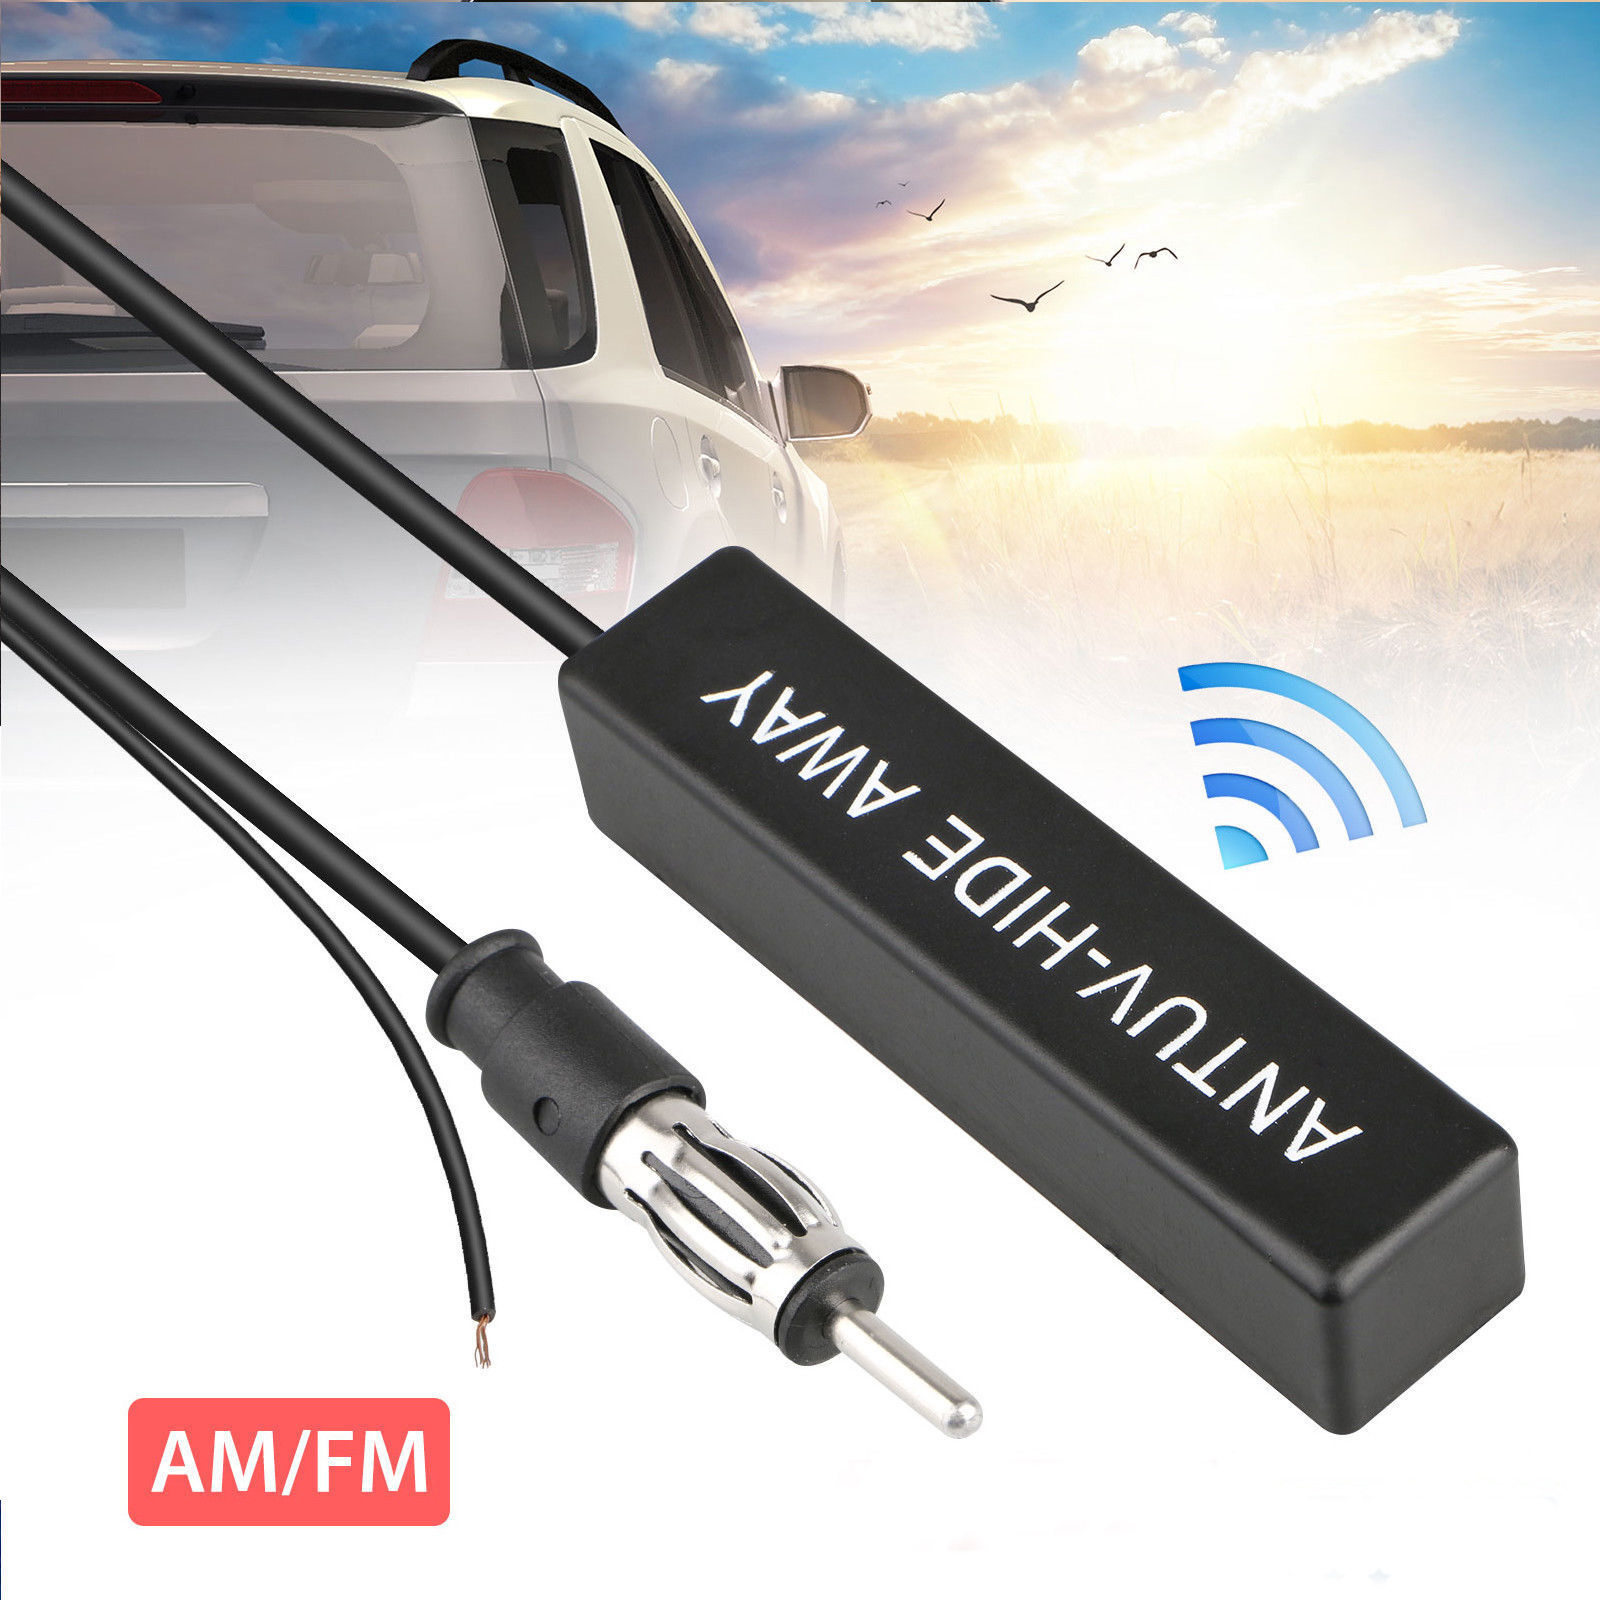 Black Black Universal Car Windshield Electronic AM-FM Radio Non-Directional Antenna Car Vehicle Auto Accessories Plastic